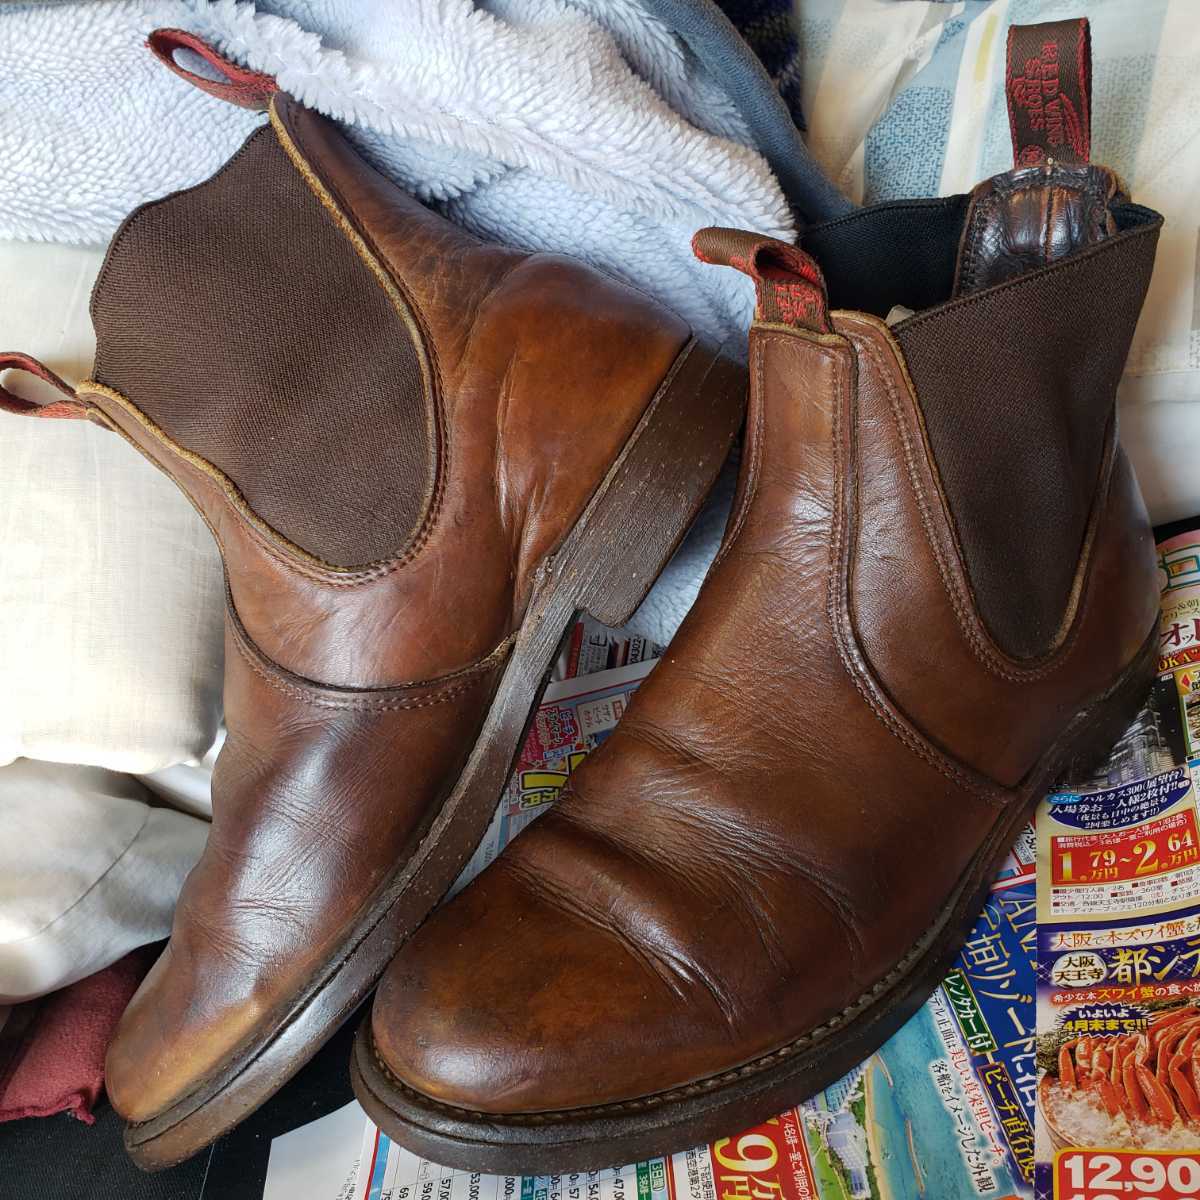 REDWING レッドウィング 8191 サイドゴア SIDEGORE ブーツ boots 皮革 7.5E レザー leather チェルシー ランチャー CHELSEA RANCHER 米国製